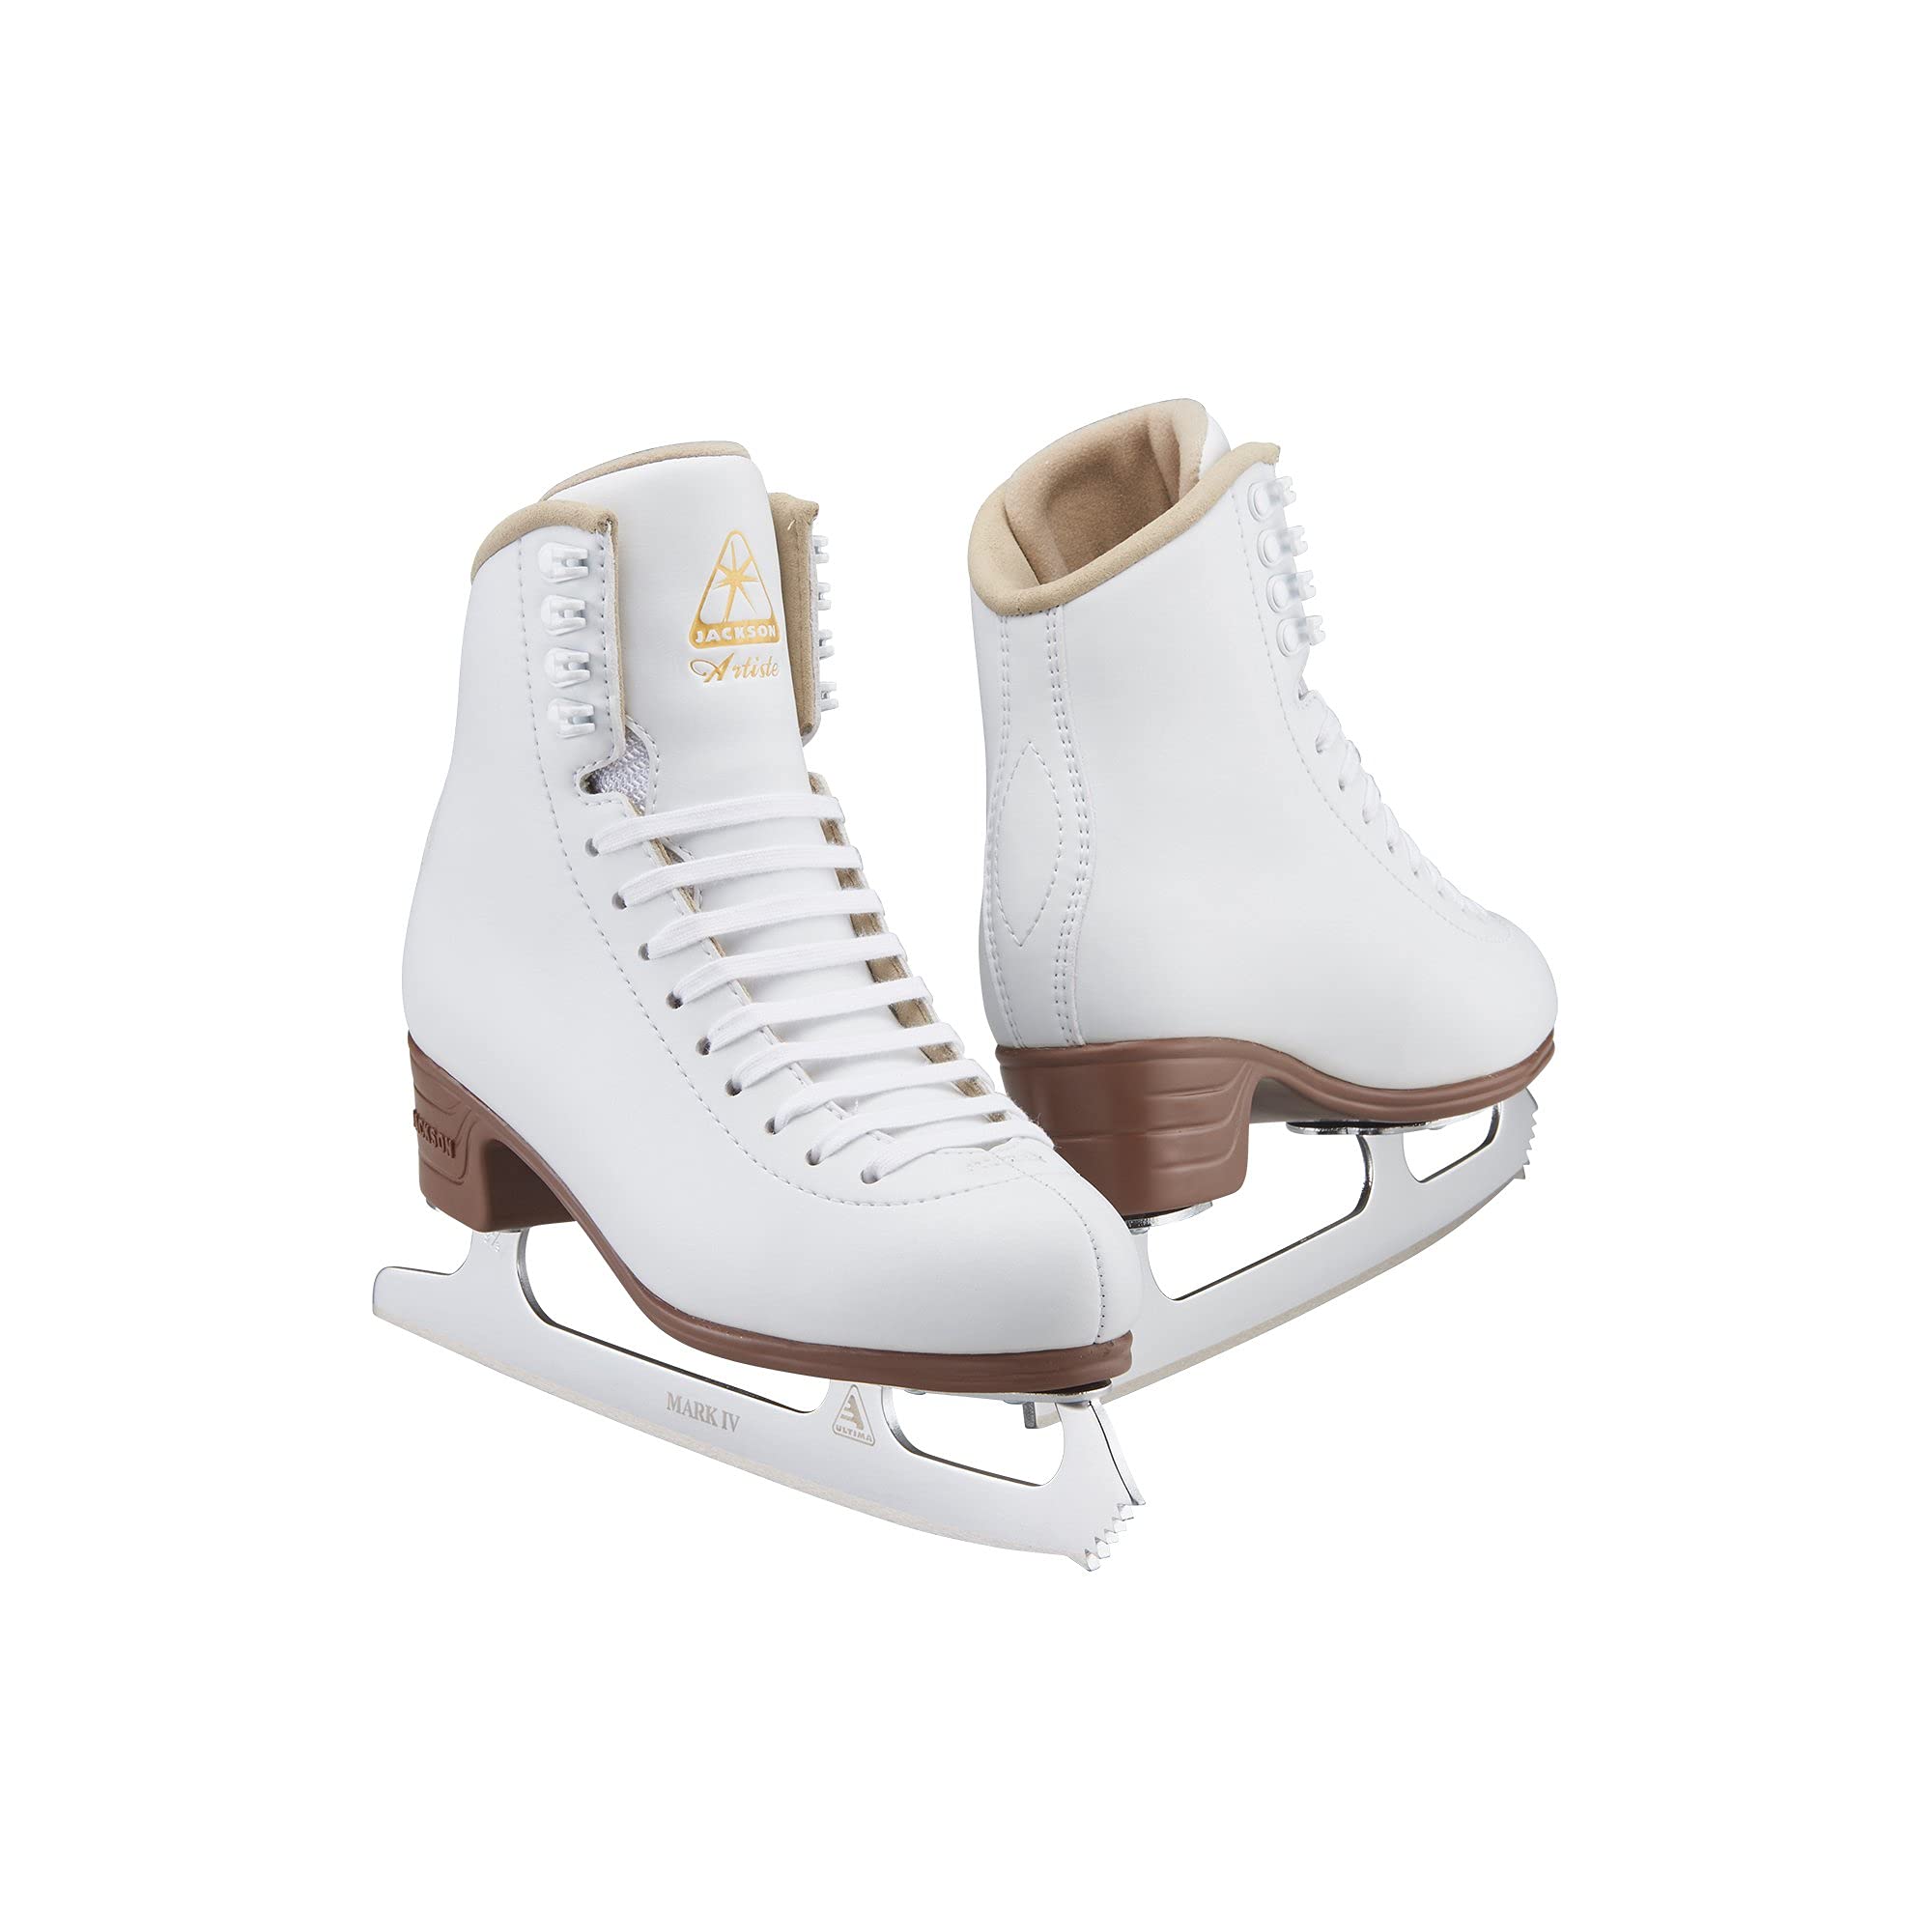 Jackson Ultima Artiste Womensgirls Figure Ice Skates - Girls Size 15 Width: B